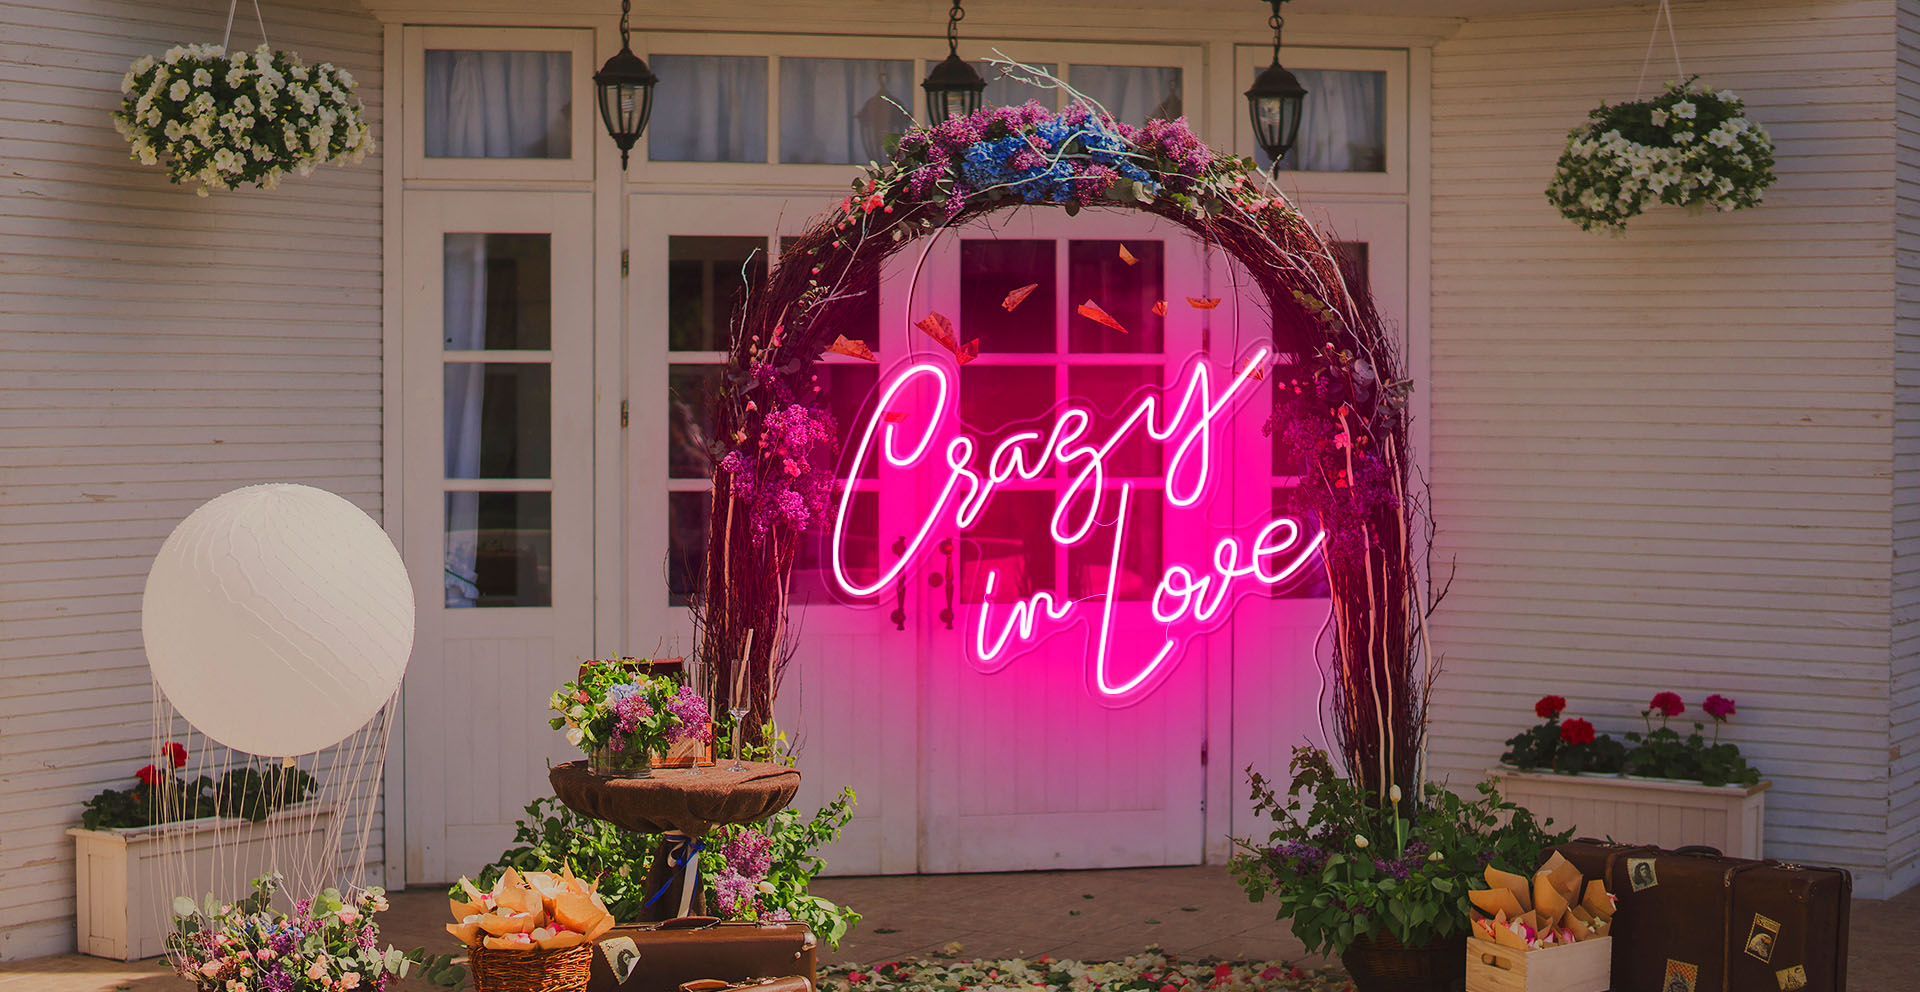 Crazy in love wedding sign